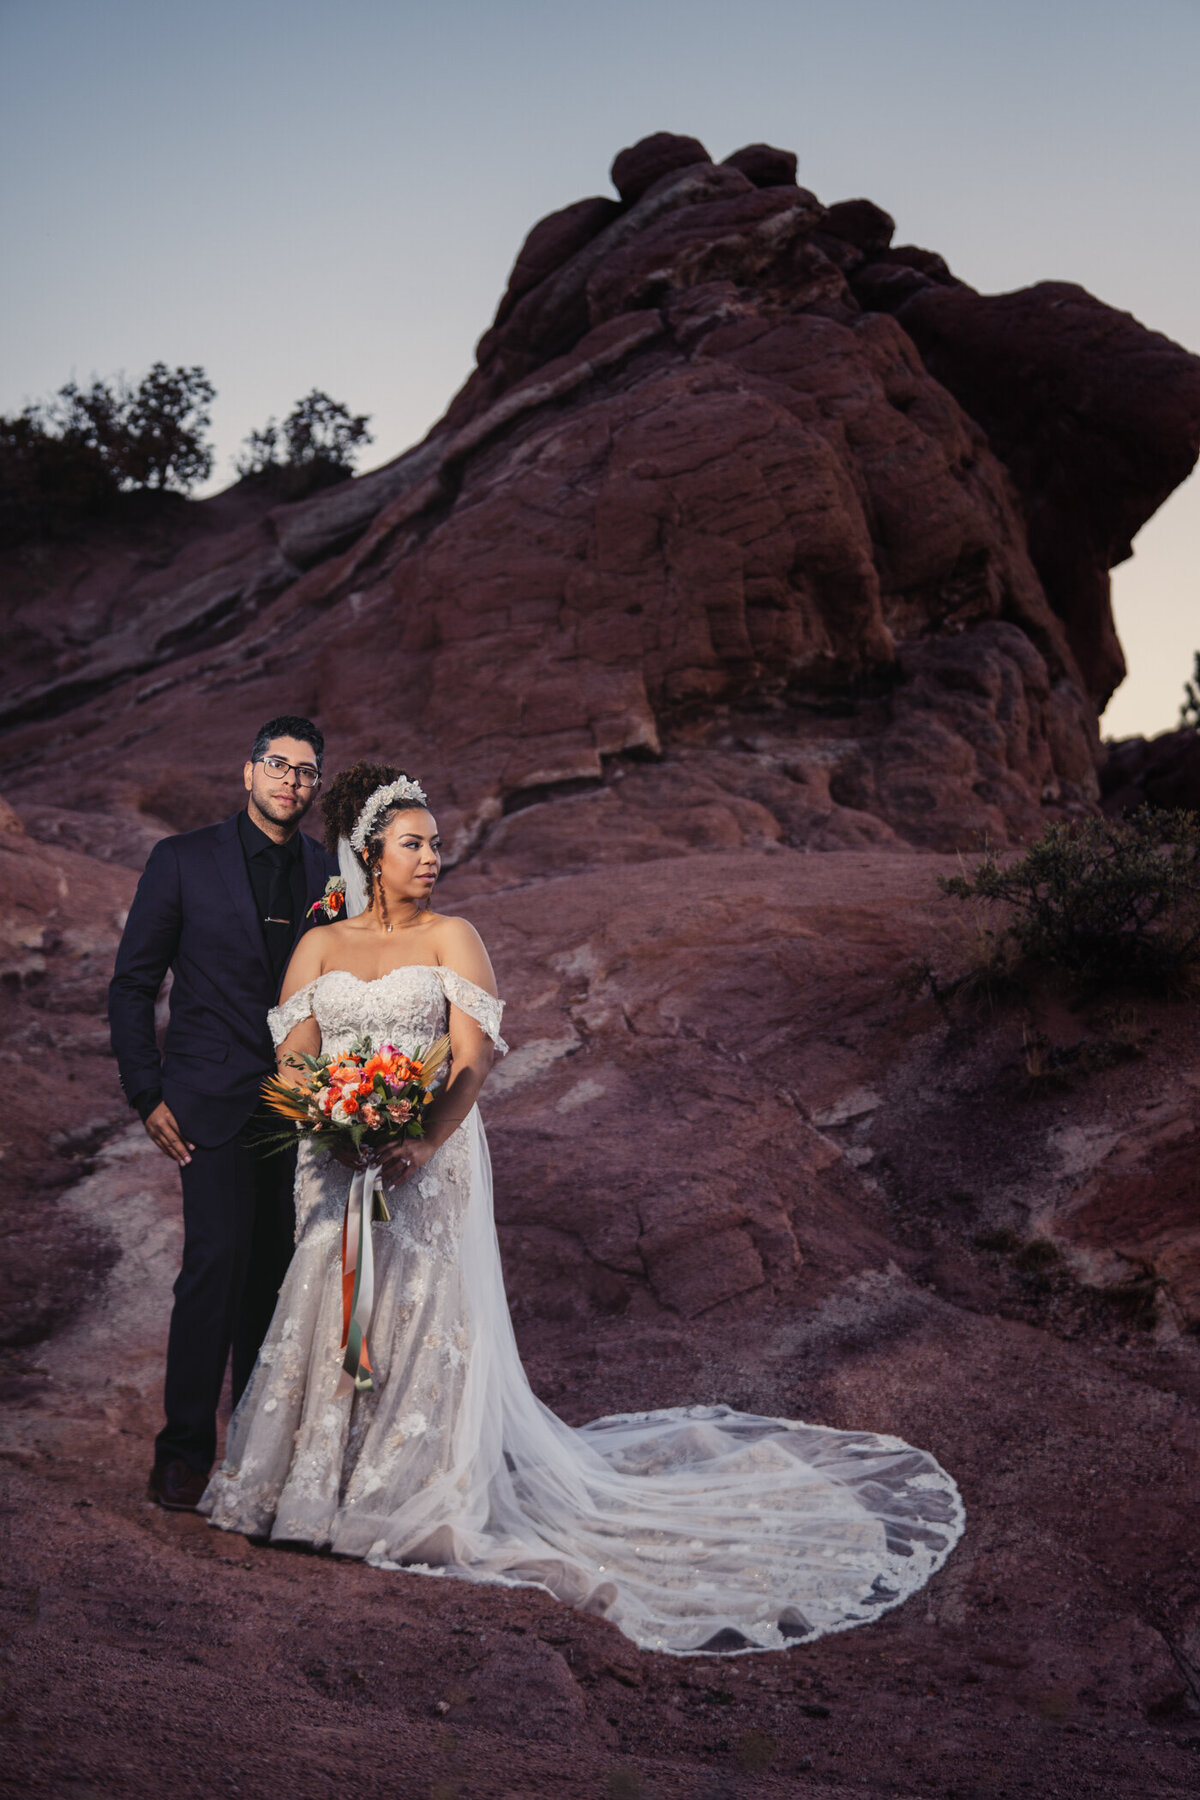 Angel_and_Noelia_Garden-of-the-Gods-Colorado-Springs-Wedding-Photography-Portraits-18_print